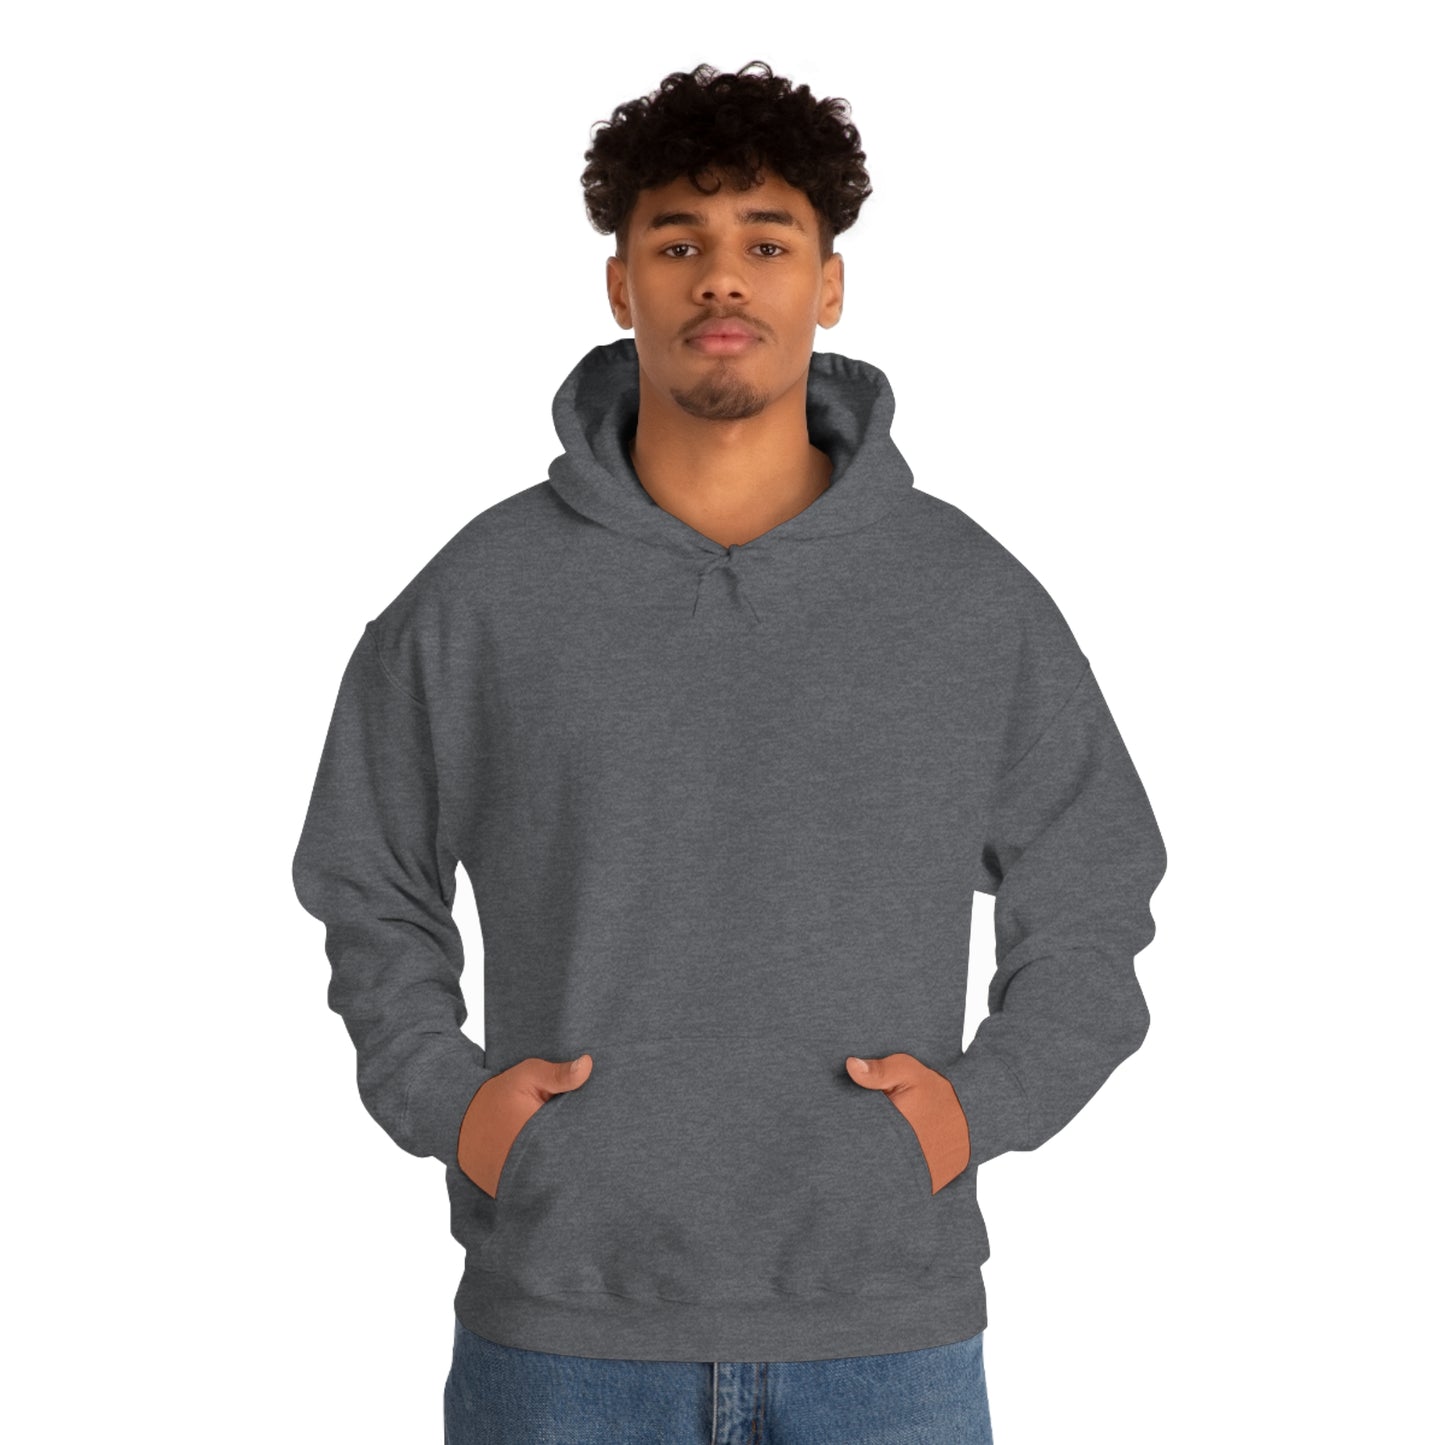 Born To Be A Hero Unisex Heavy Blend™ Hooded Sweatshirt